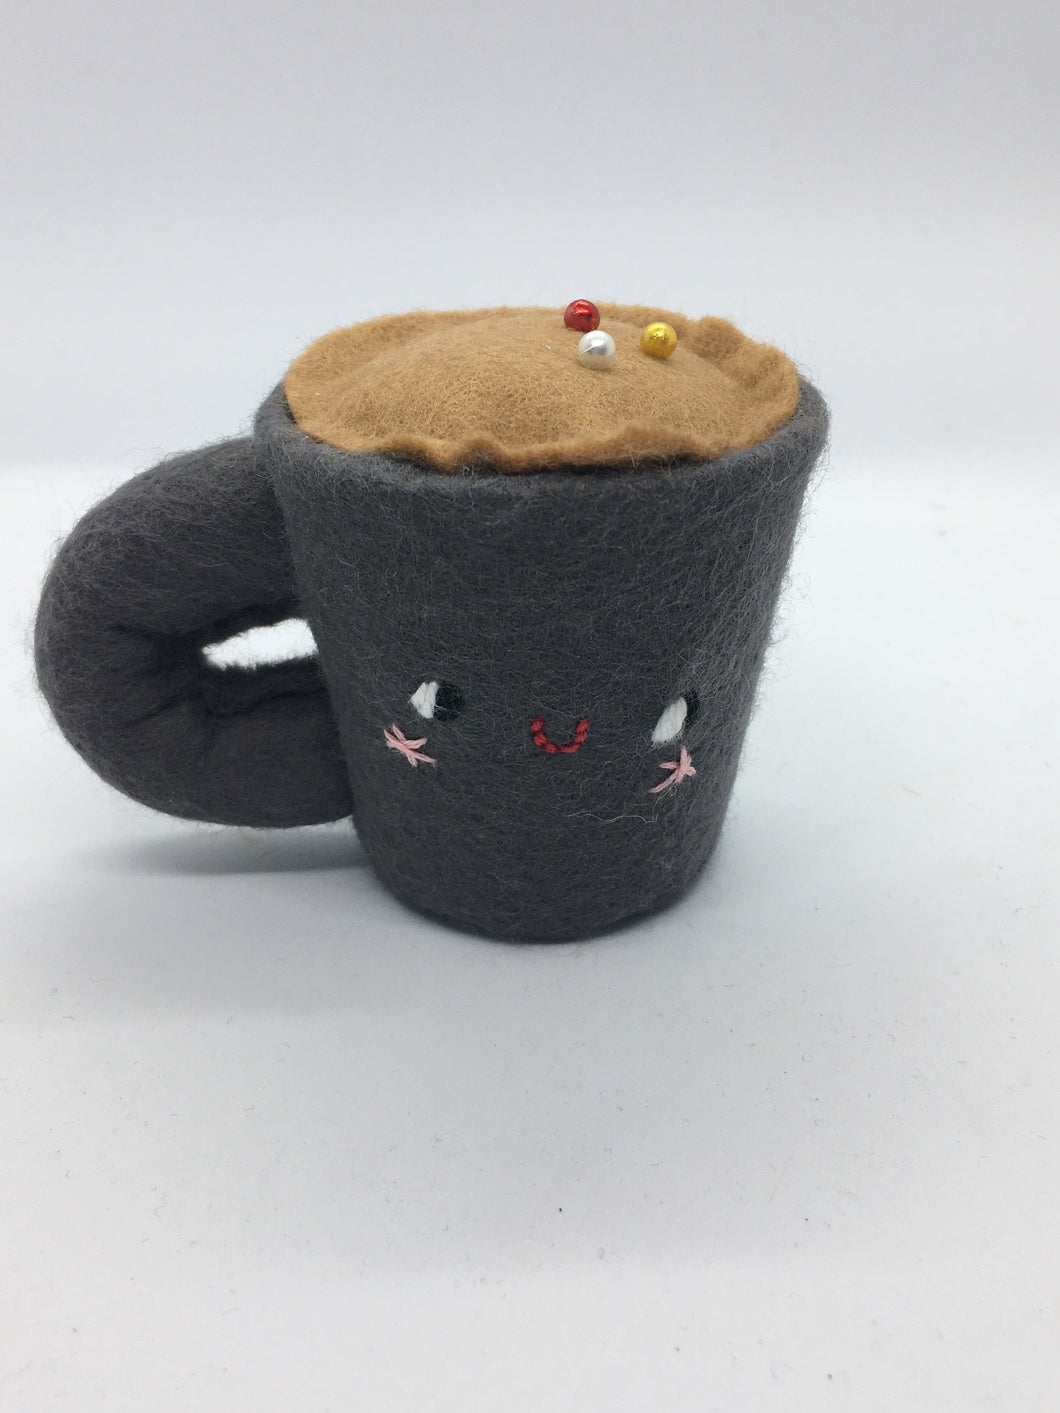 Felt Teacup Pincushion - Little Egg Design